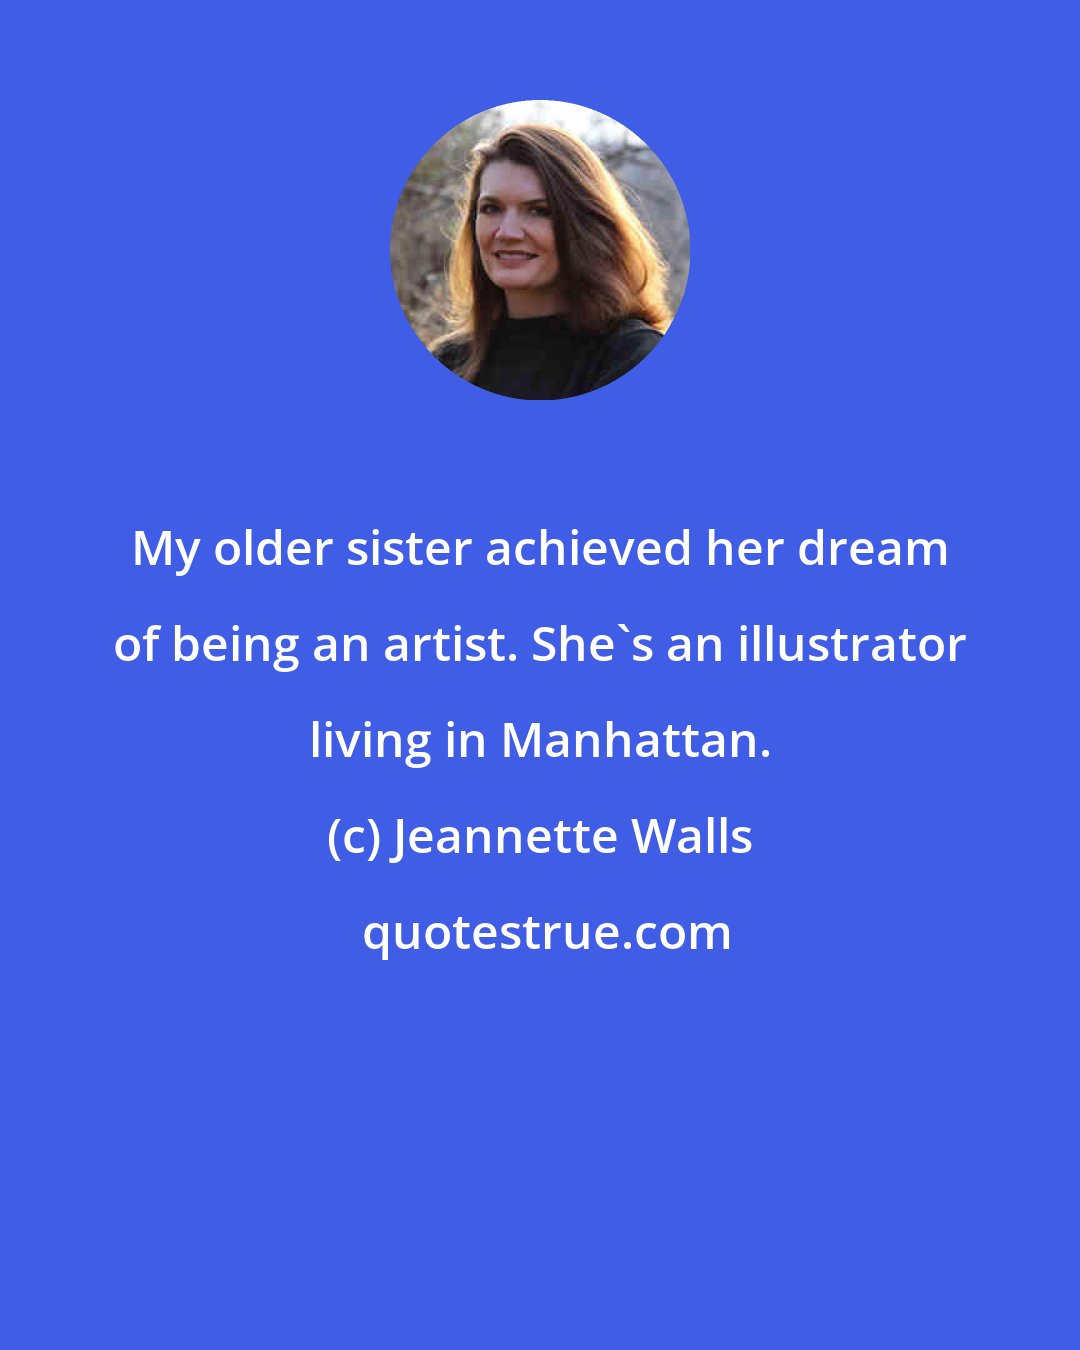 Jeannette Walls: My older sister achieved her dream of being an artist. She's an illustrator living in Manhattan.